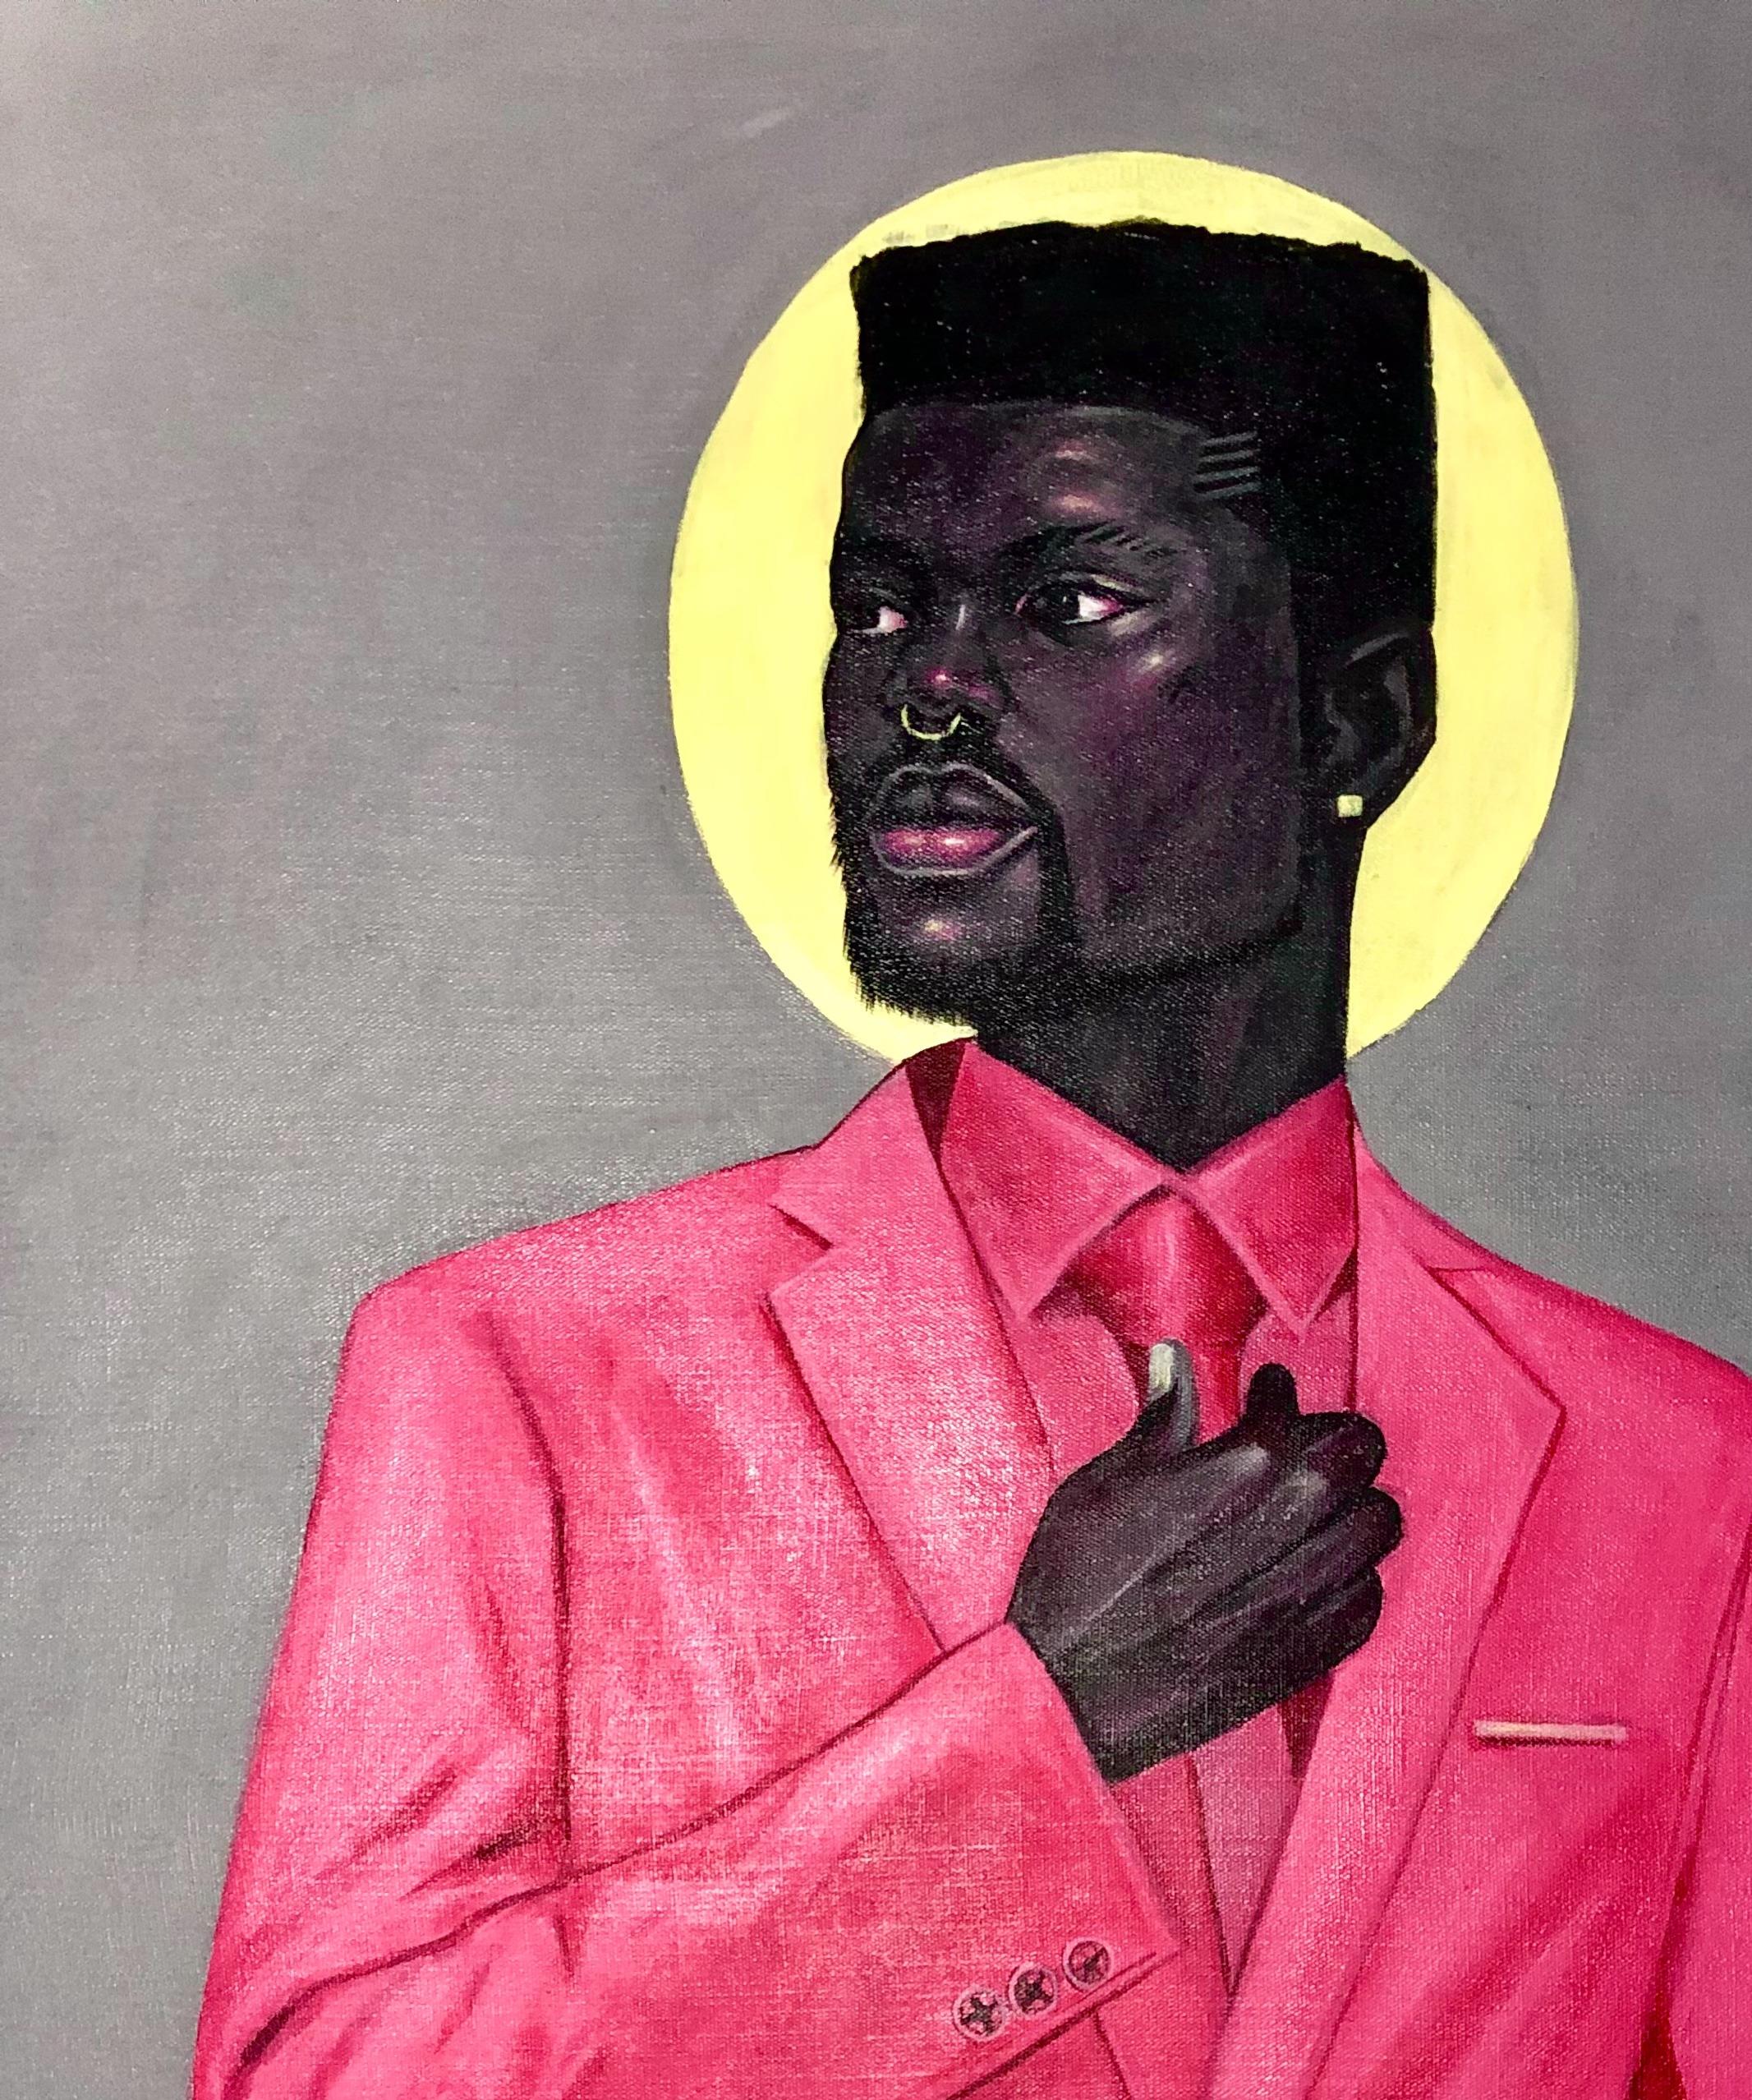 Black Man Stereotype 2 (Mandingo) - Painting by Akinboye Akinola Peter